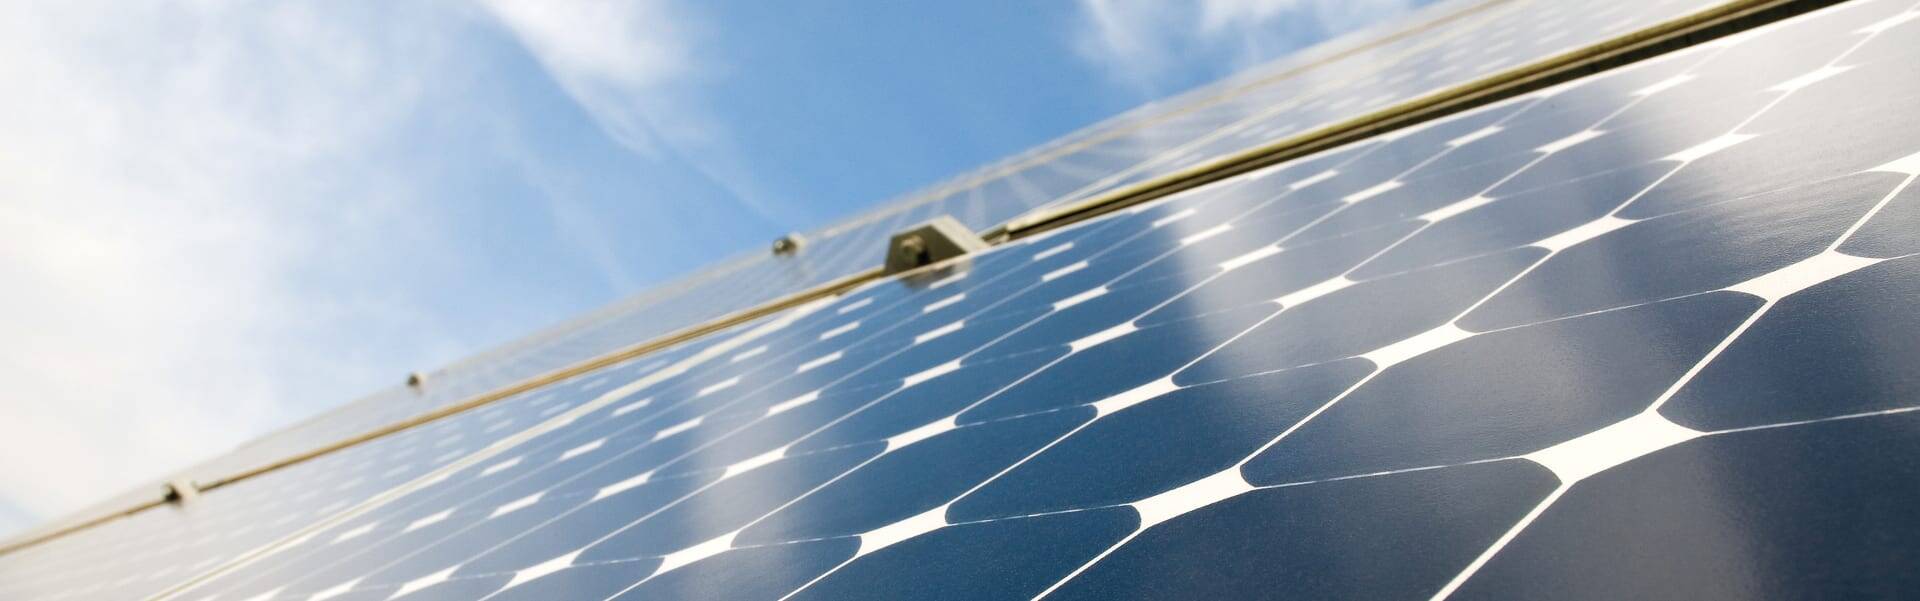 Ofgem investigates social housing solar scheme